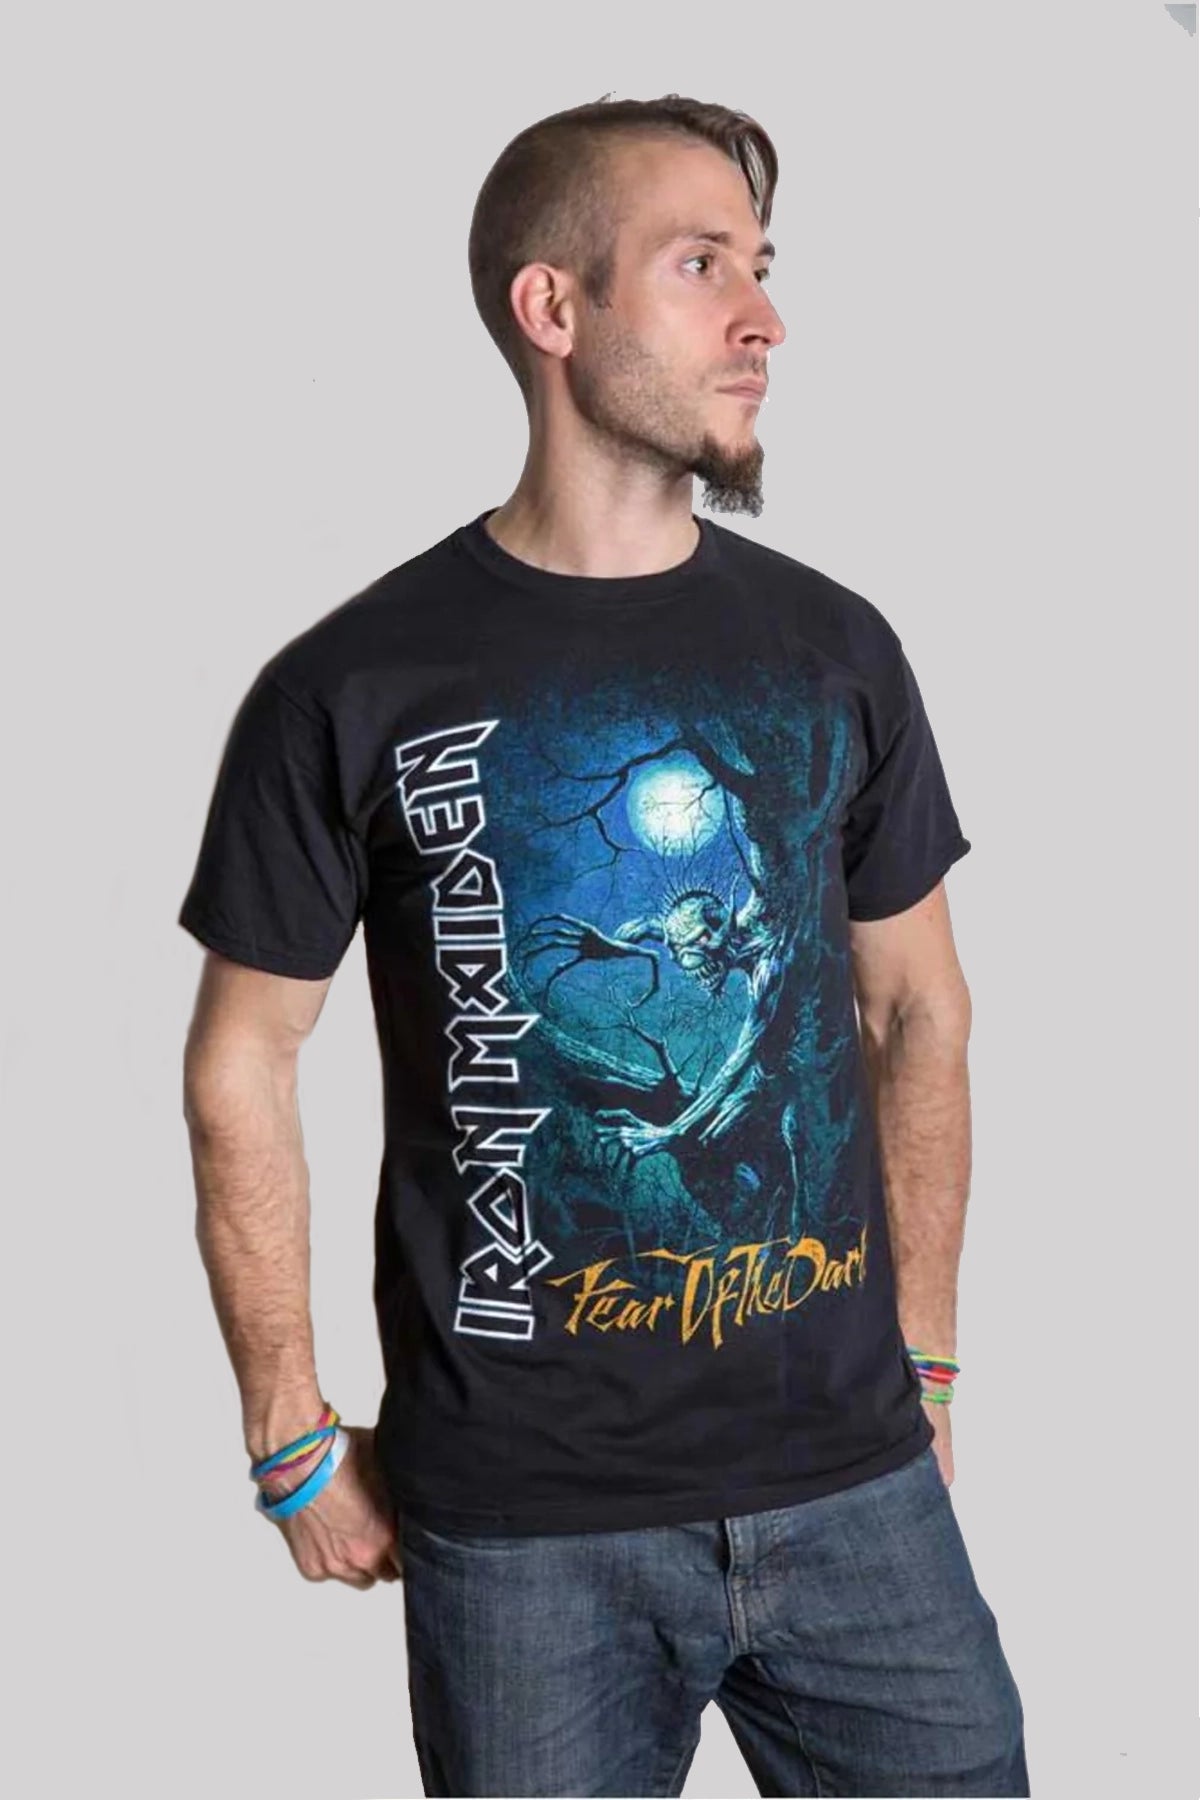 Iron Maiden Fear Of The Dark T-Shirt